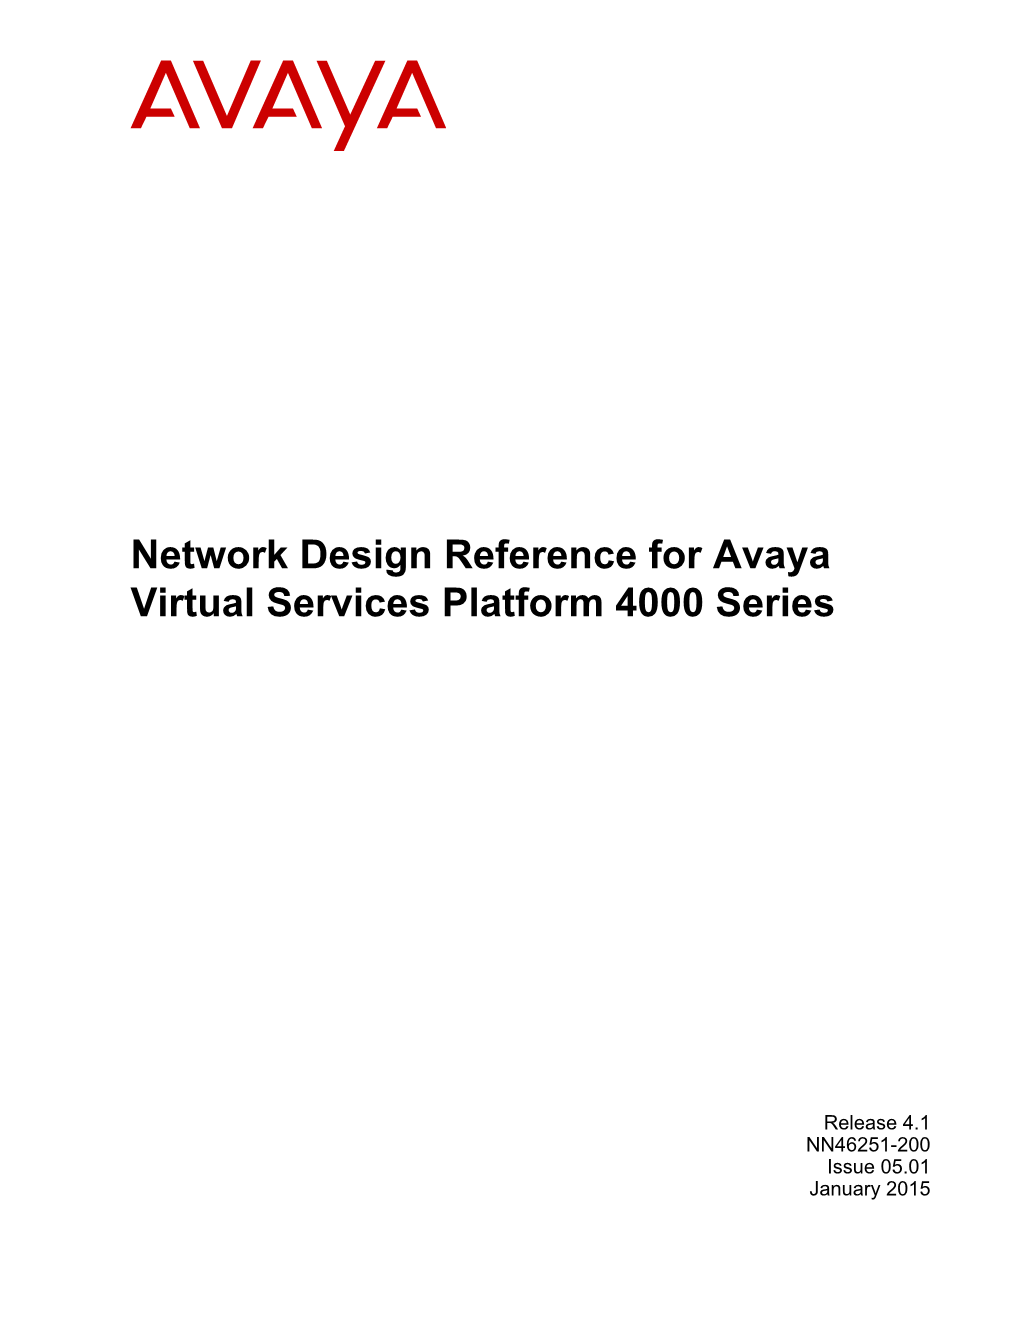 Network Design Reference for Avaya Virtual Services Platform 4000 Series